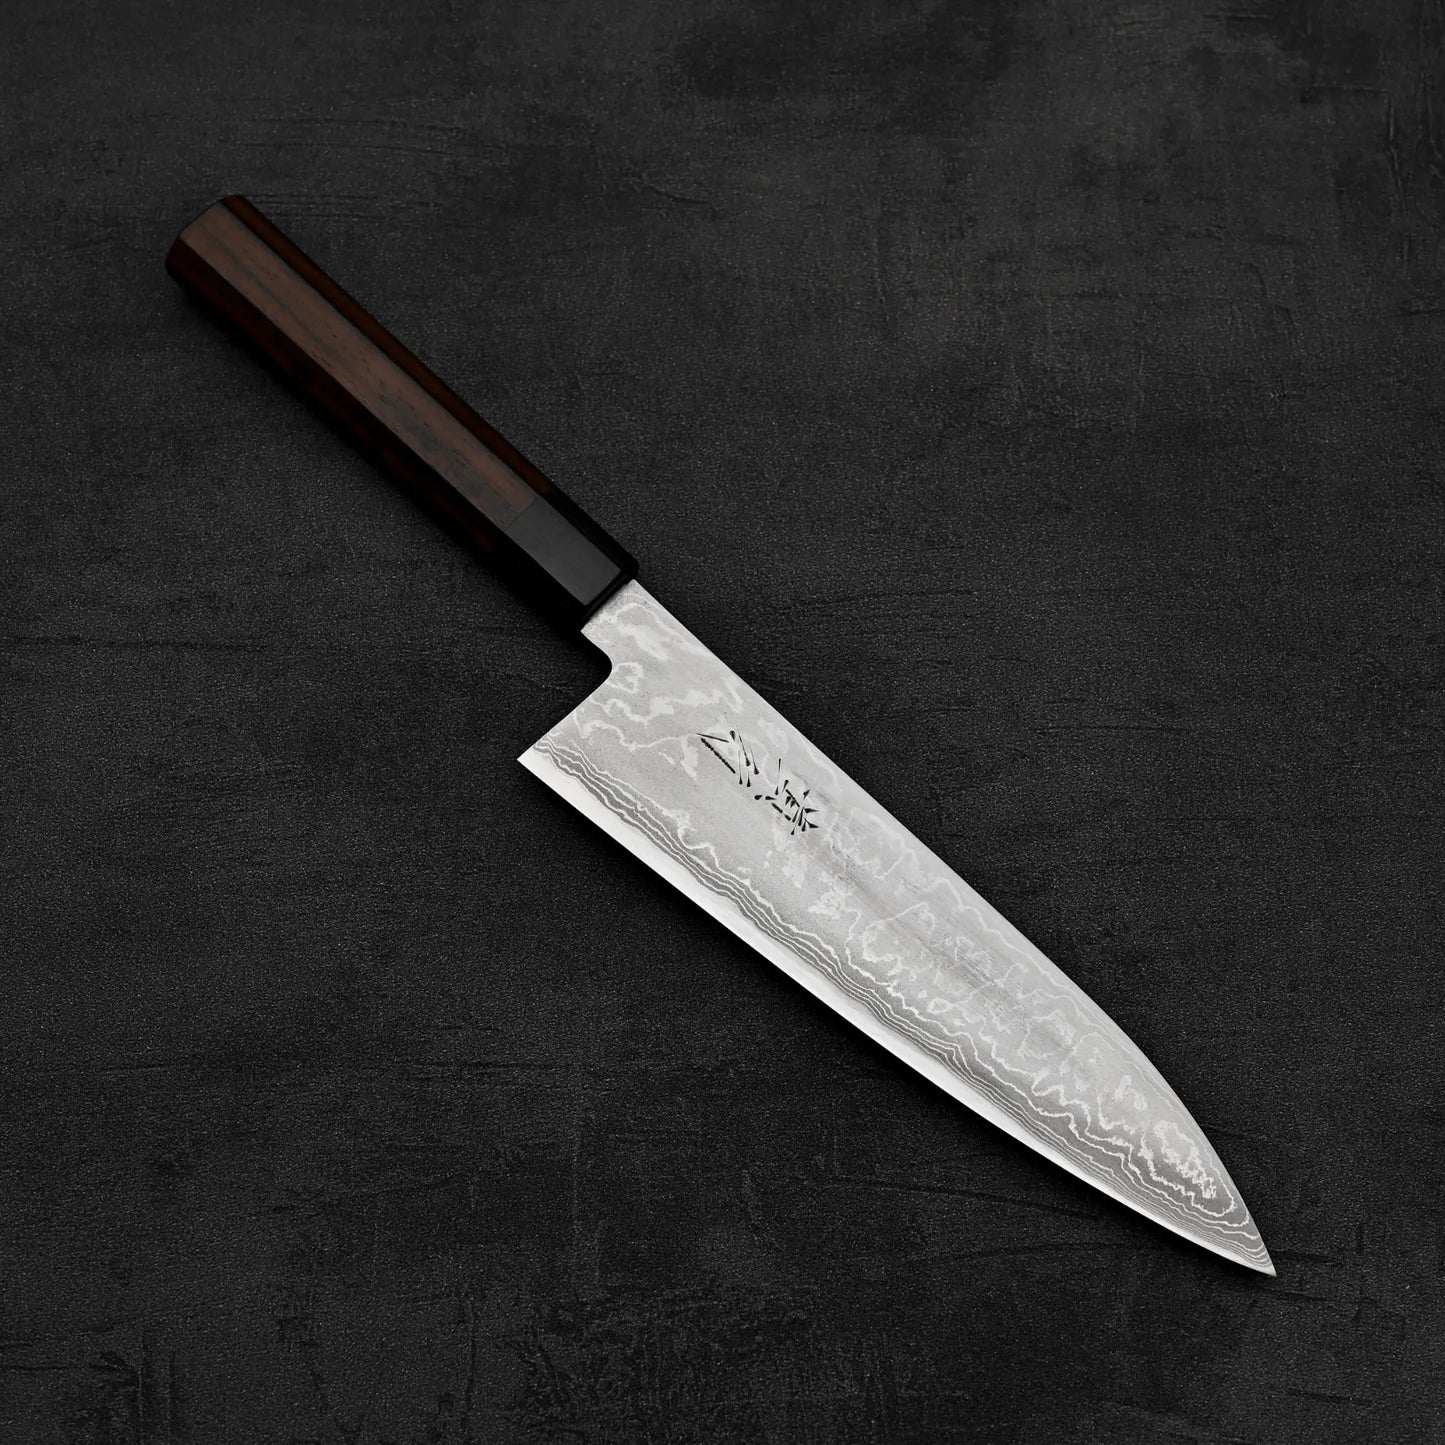 Top down view of Takayuki Iwai aogami#2 damascus 210mm gyuto knife in diagonal position